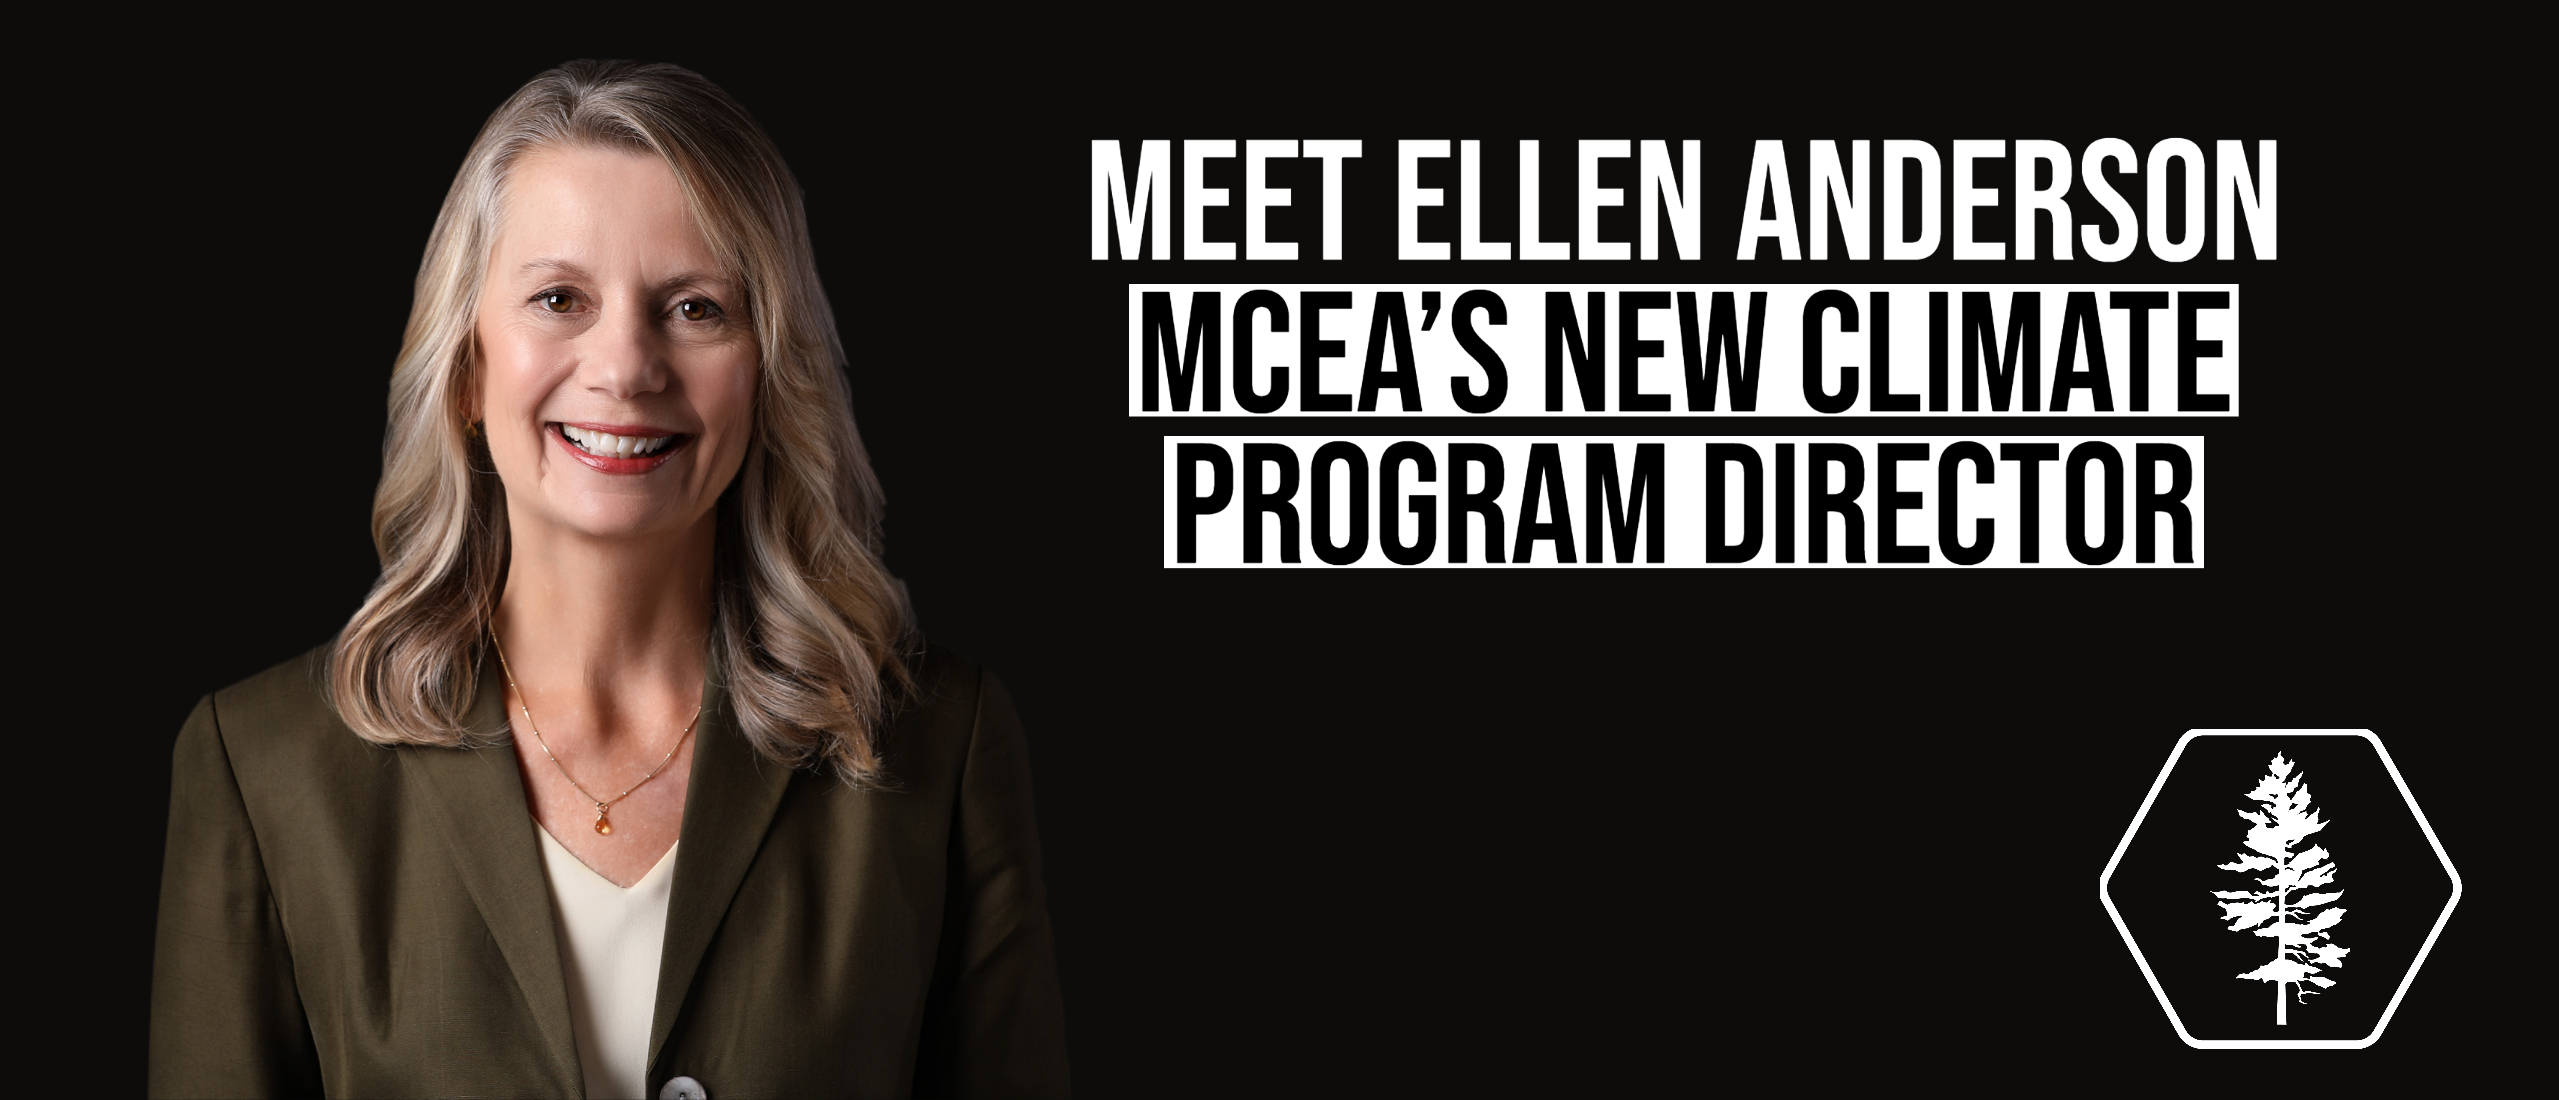 Meet Ellen Anderson MCEA's new climate program director. Photo of Ellen on the left side of graphic